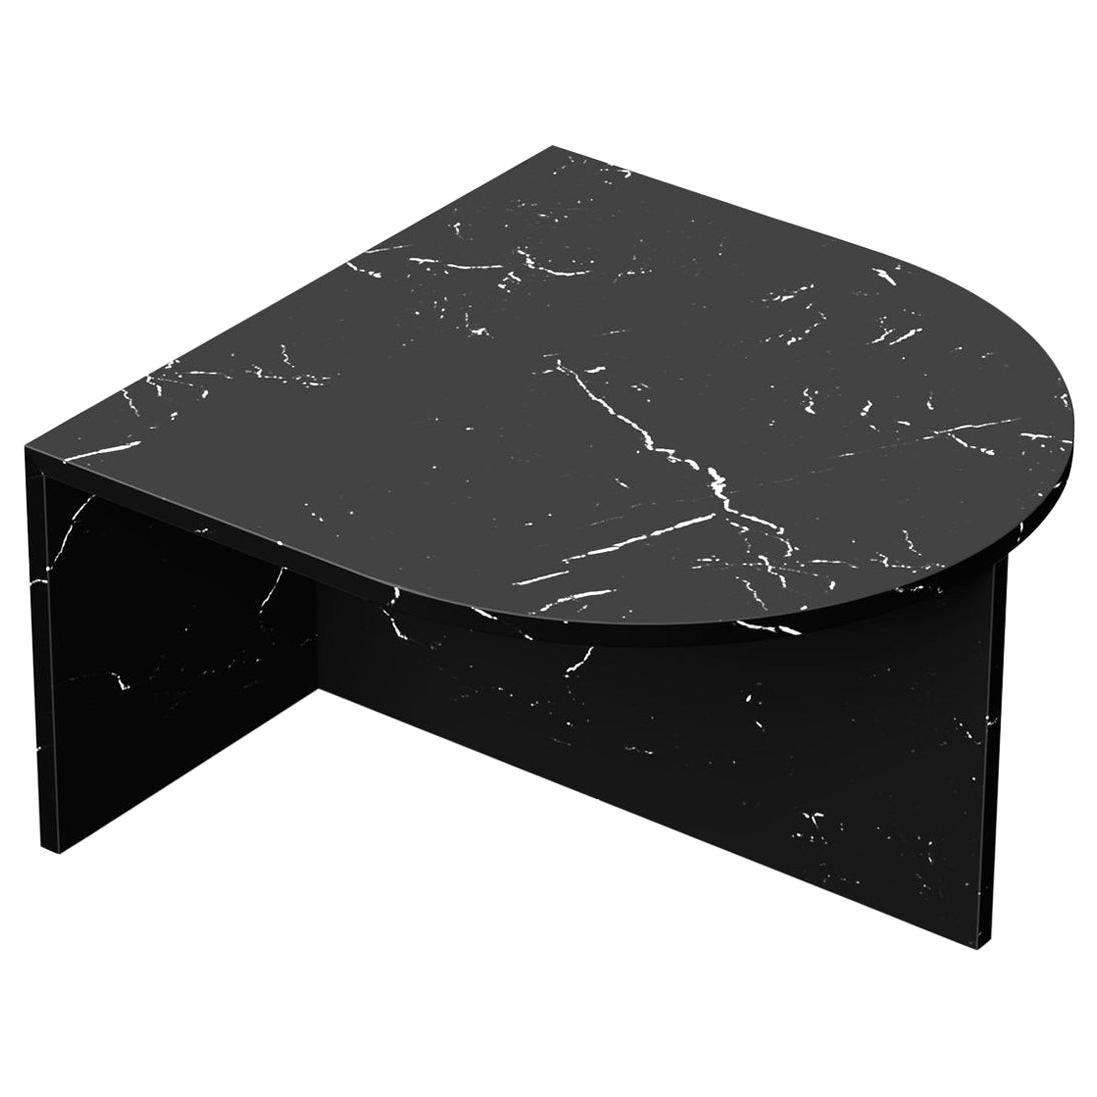 Black Marble "Fifty Oblong" Coffee Table, Sebastian Scherer